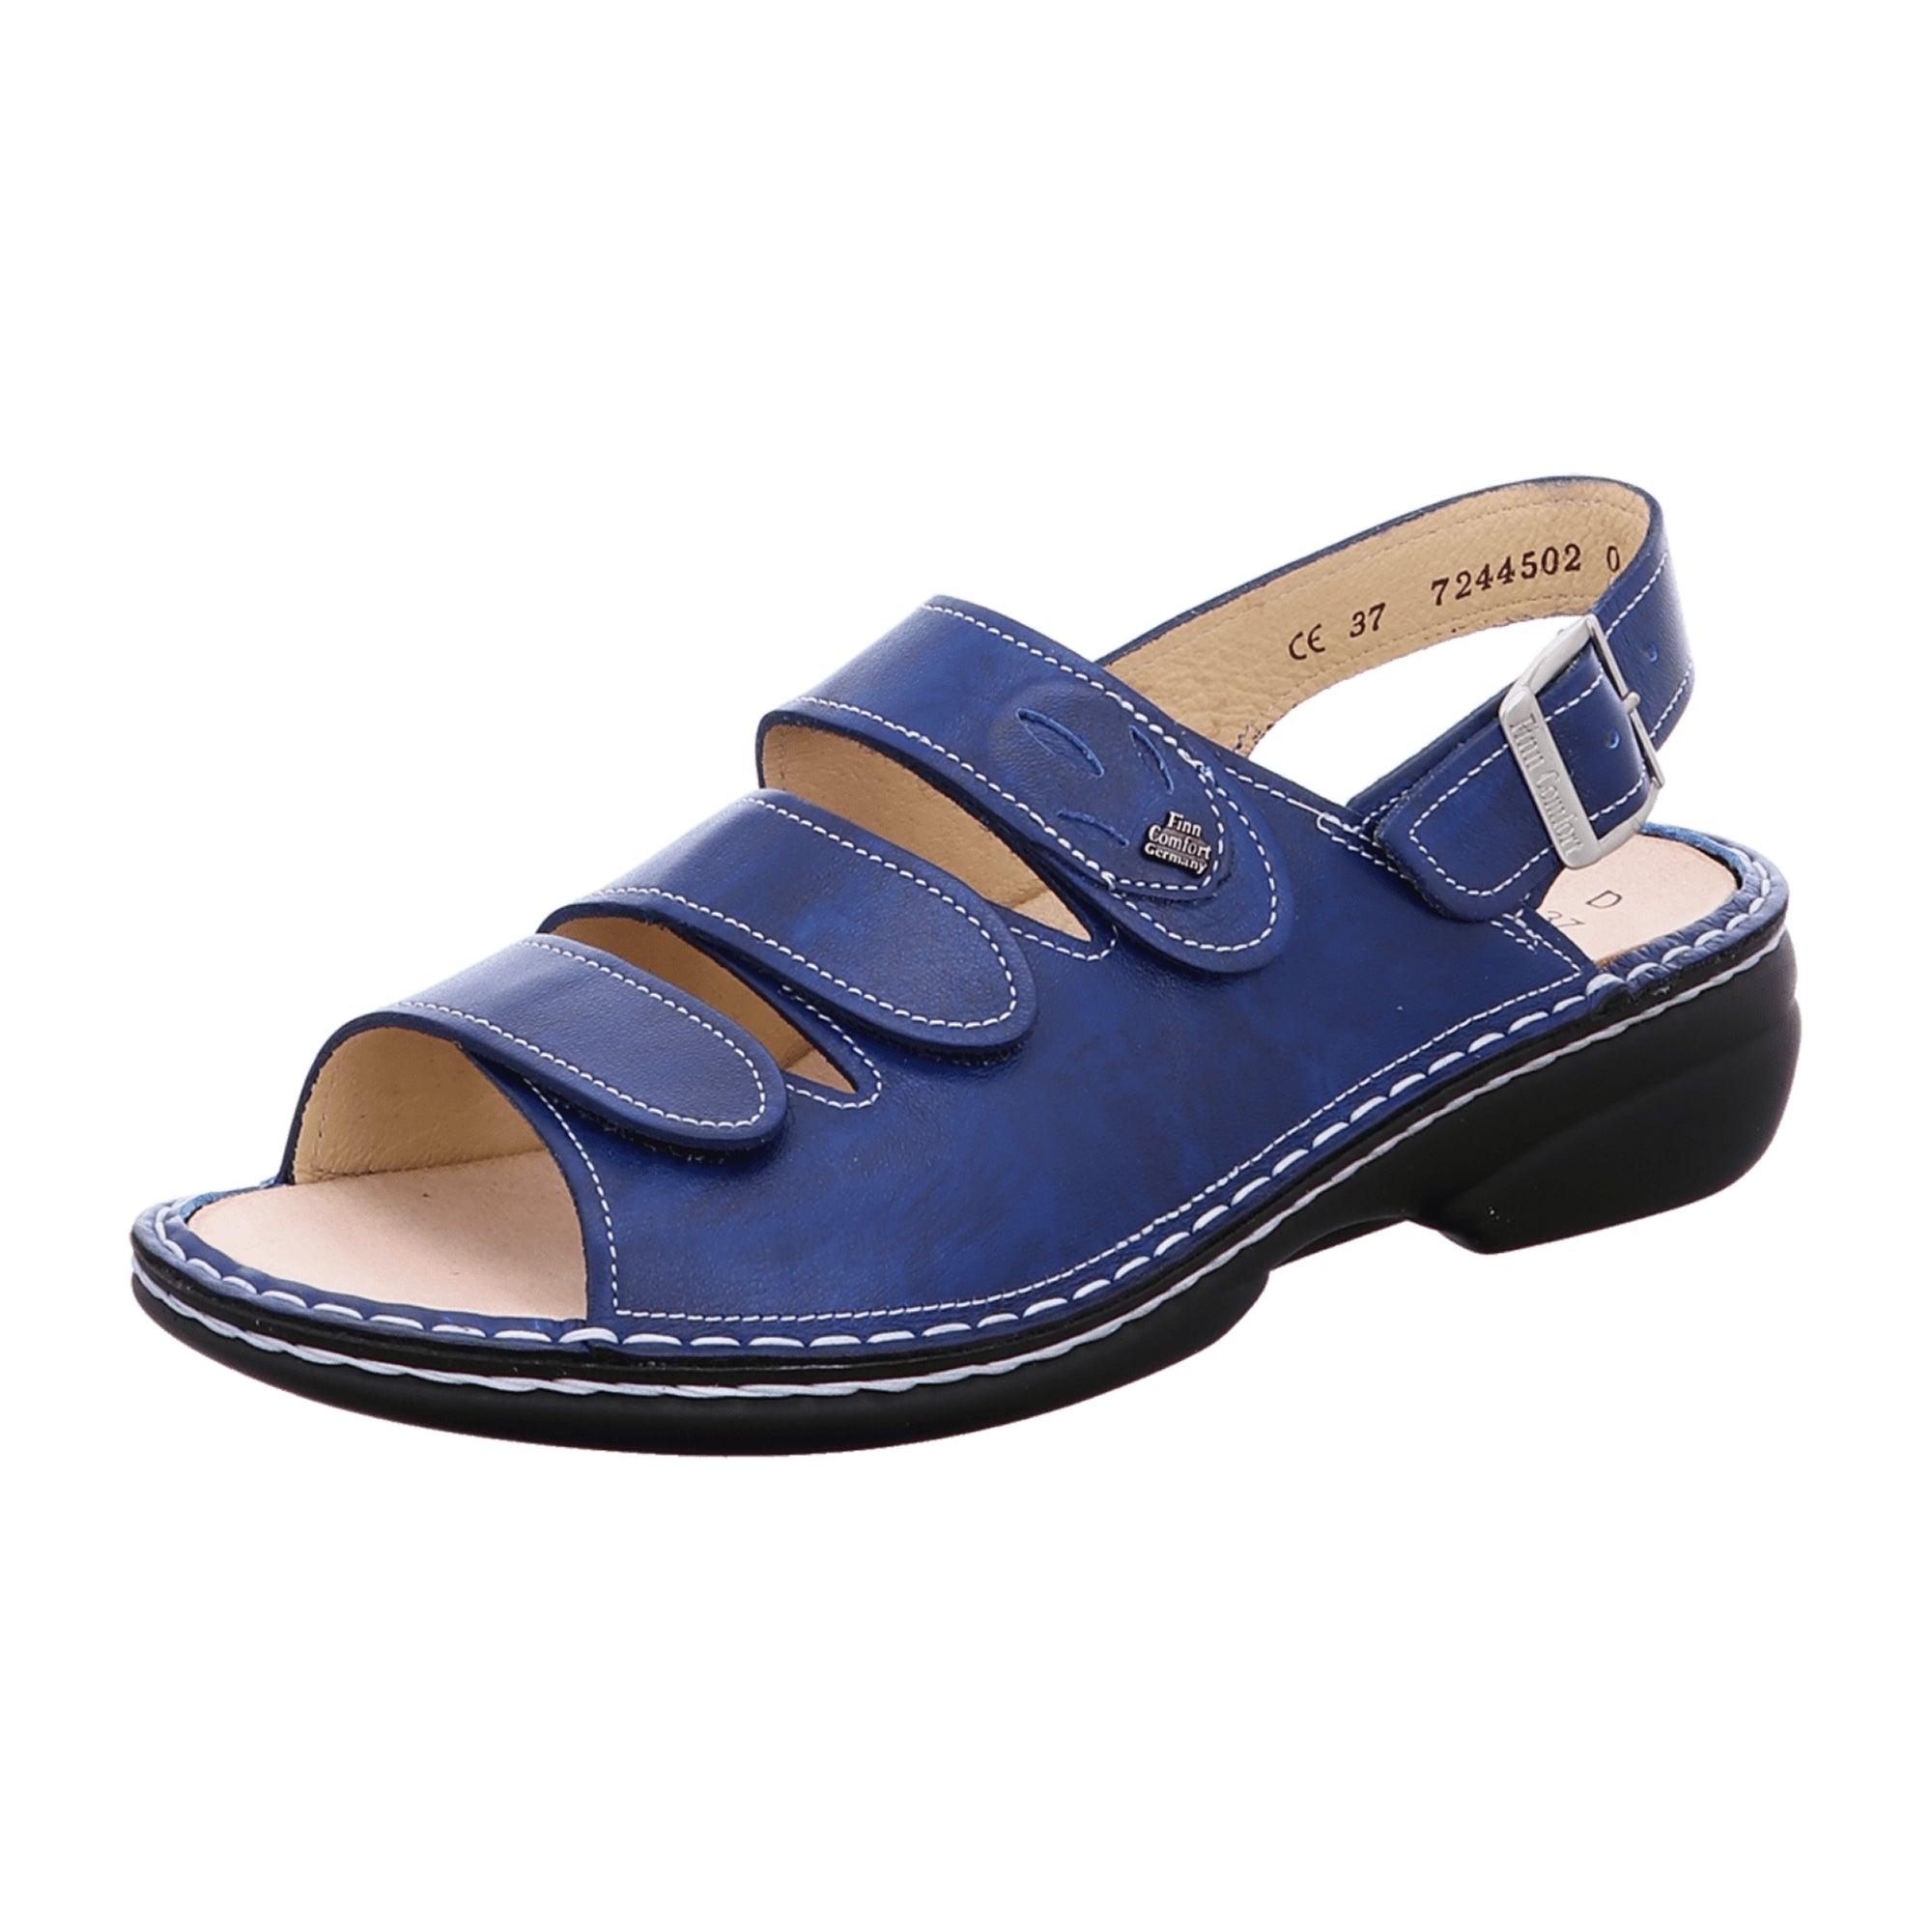 Finn Comfort Saloniki Women's Comfort Sandals - Stylish Blue